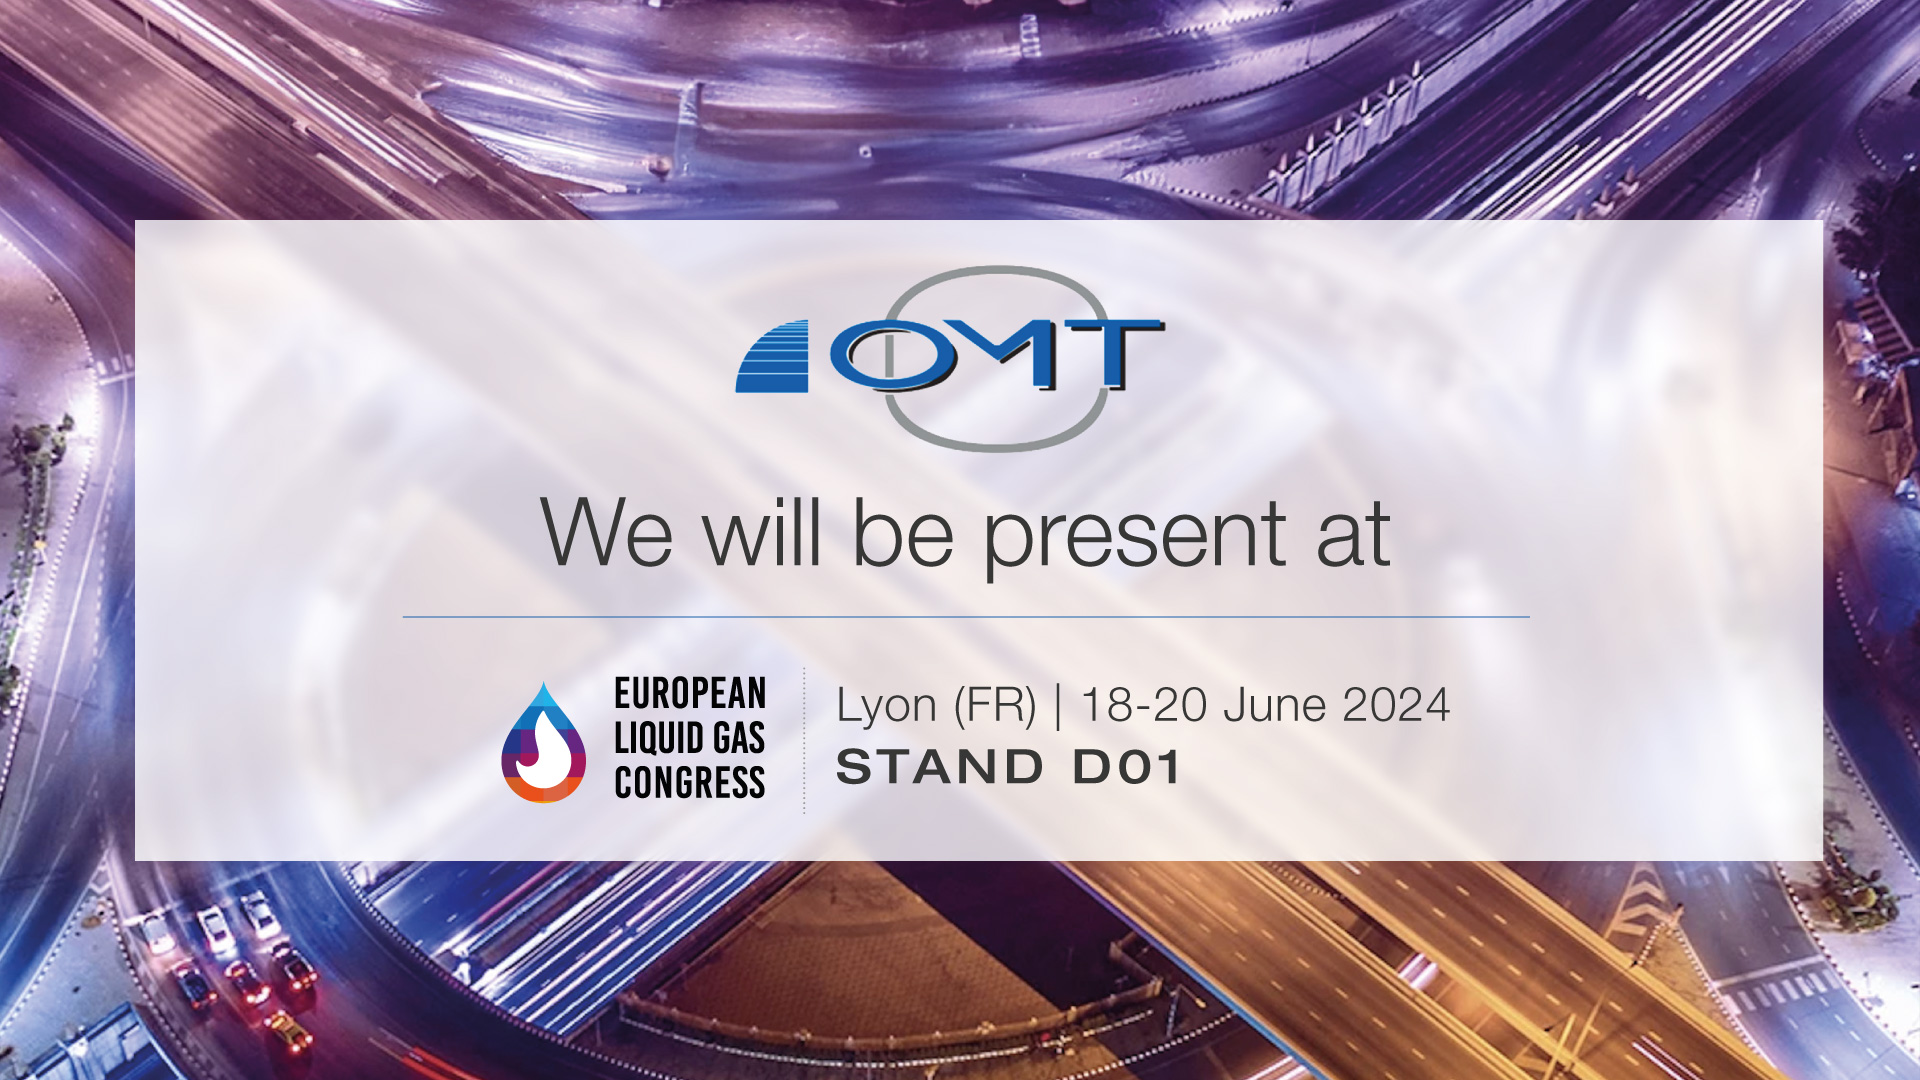 OMT-Spa-sarà-presente-all'European-Liquid-Gas-Congress-2024, Gruppo-Autosped-G